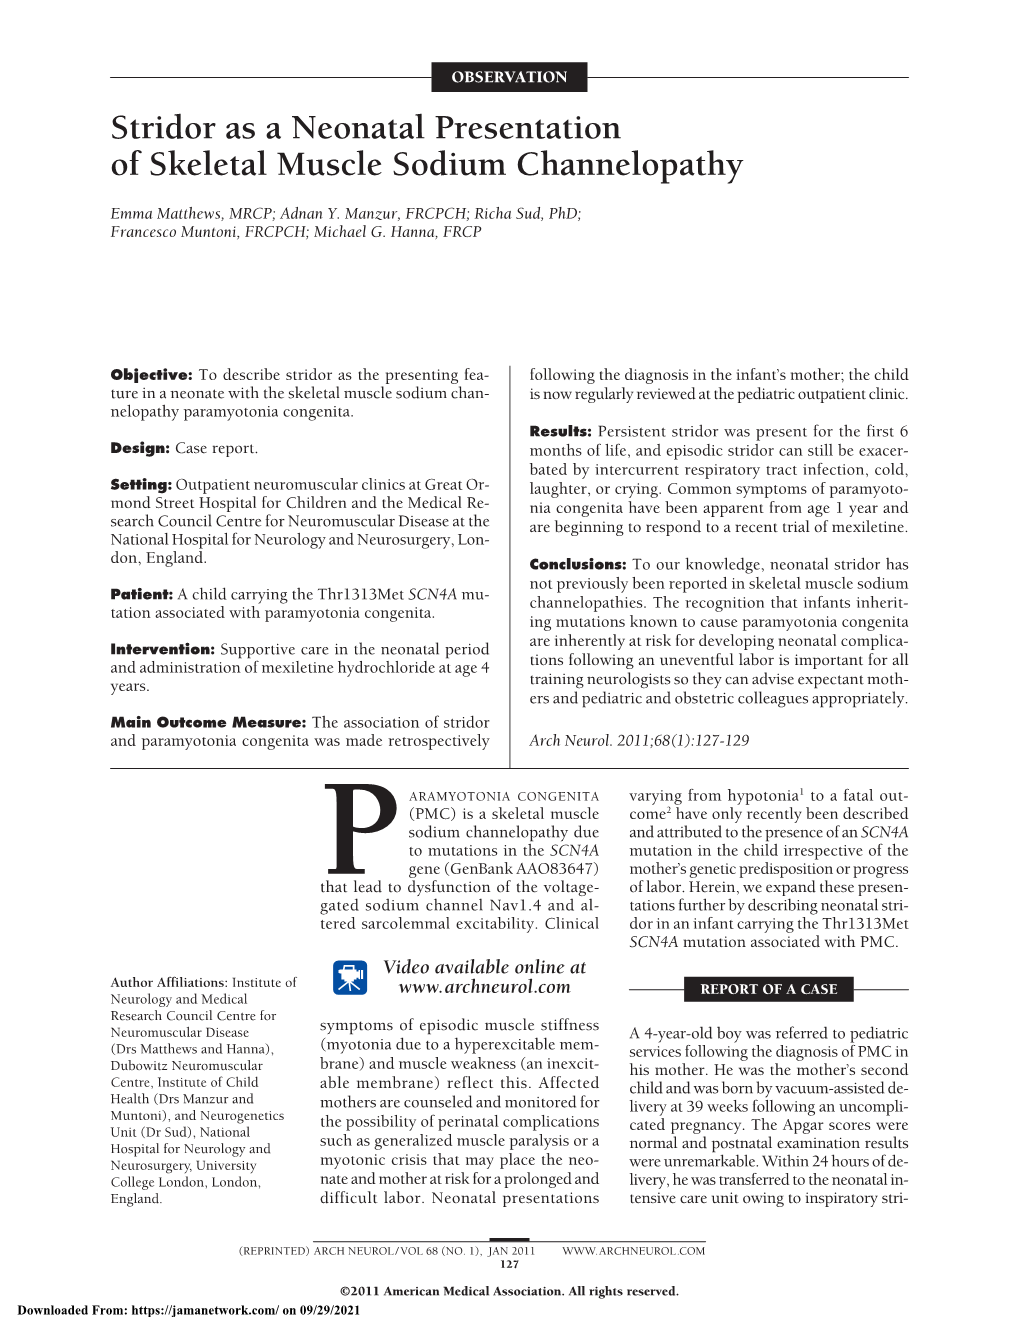 Stridor As a Neonatal Presentation of Skeletal Muscle Sodium Channelopathy